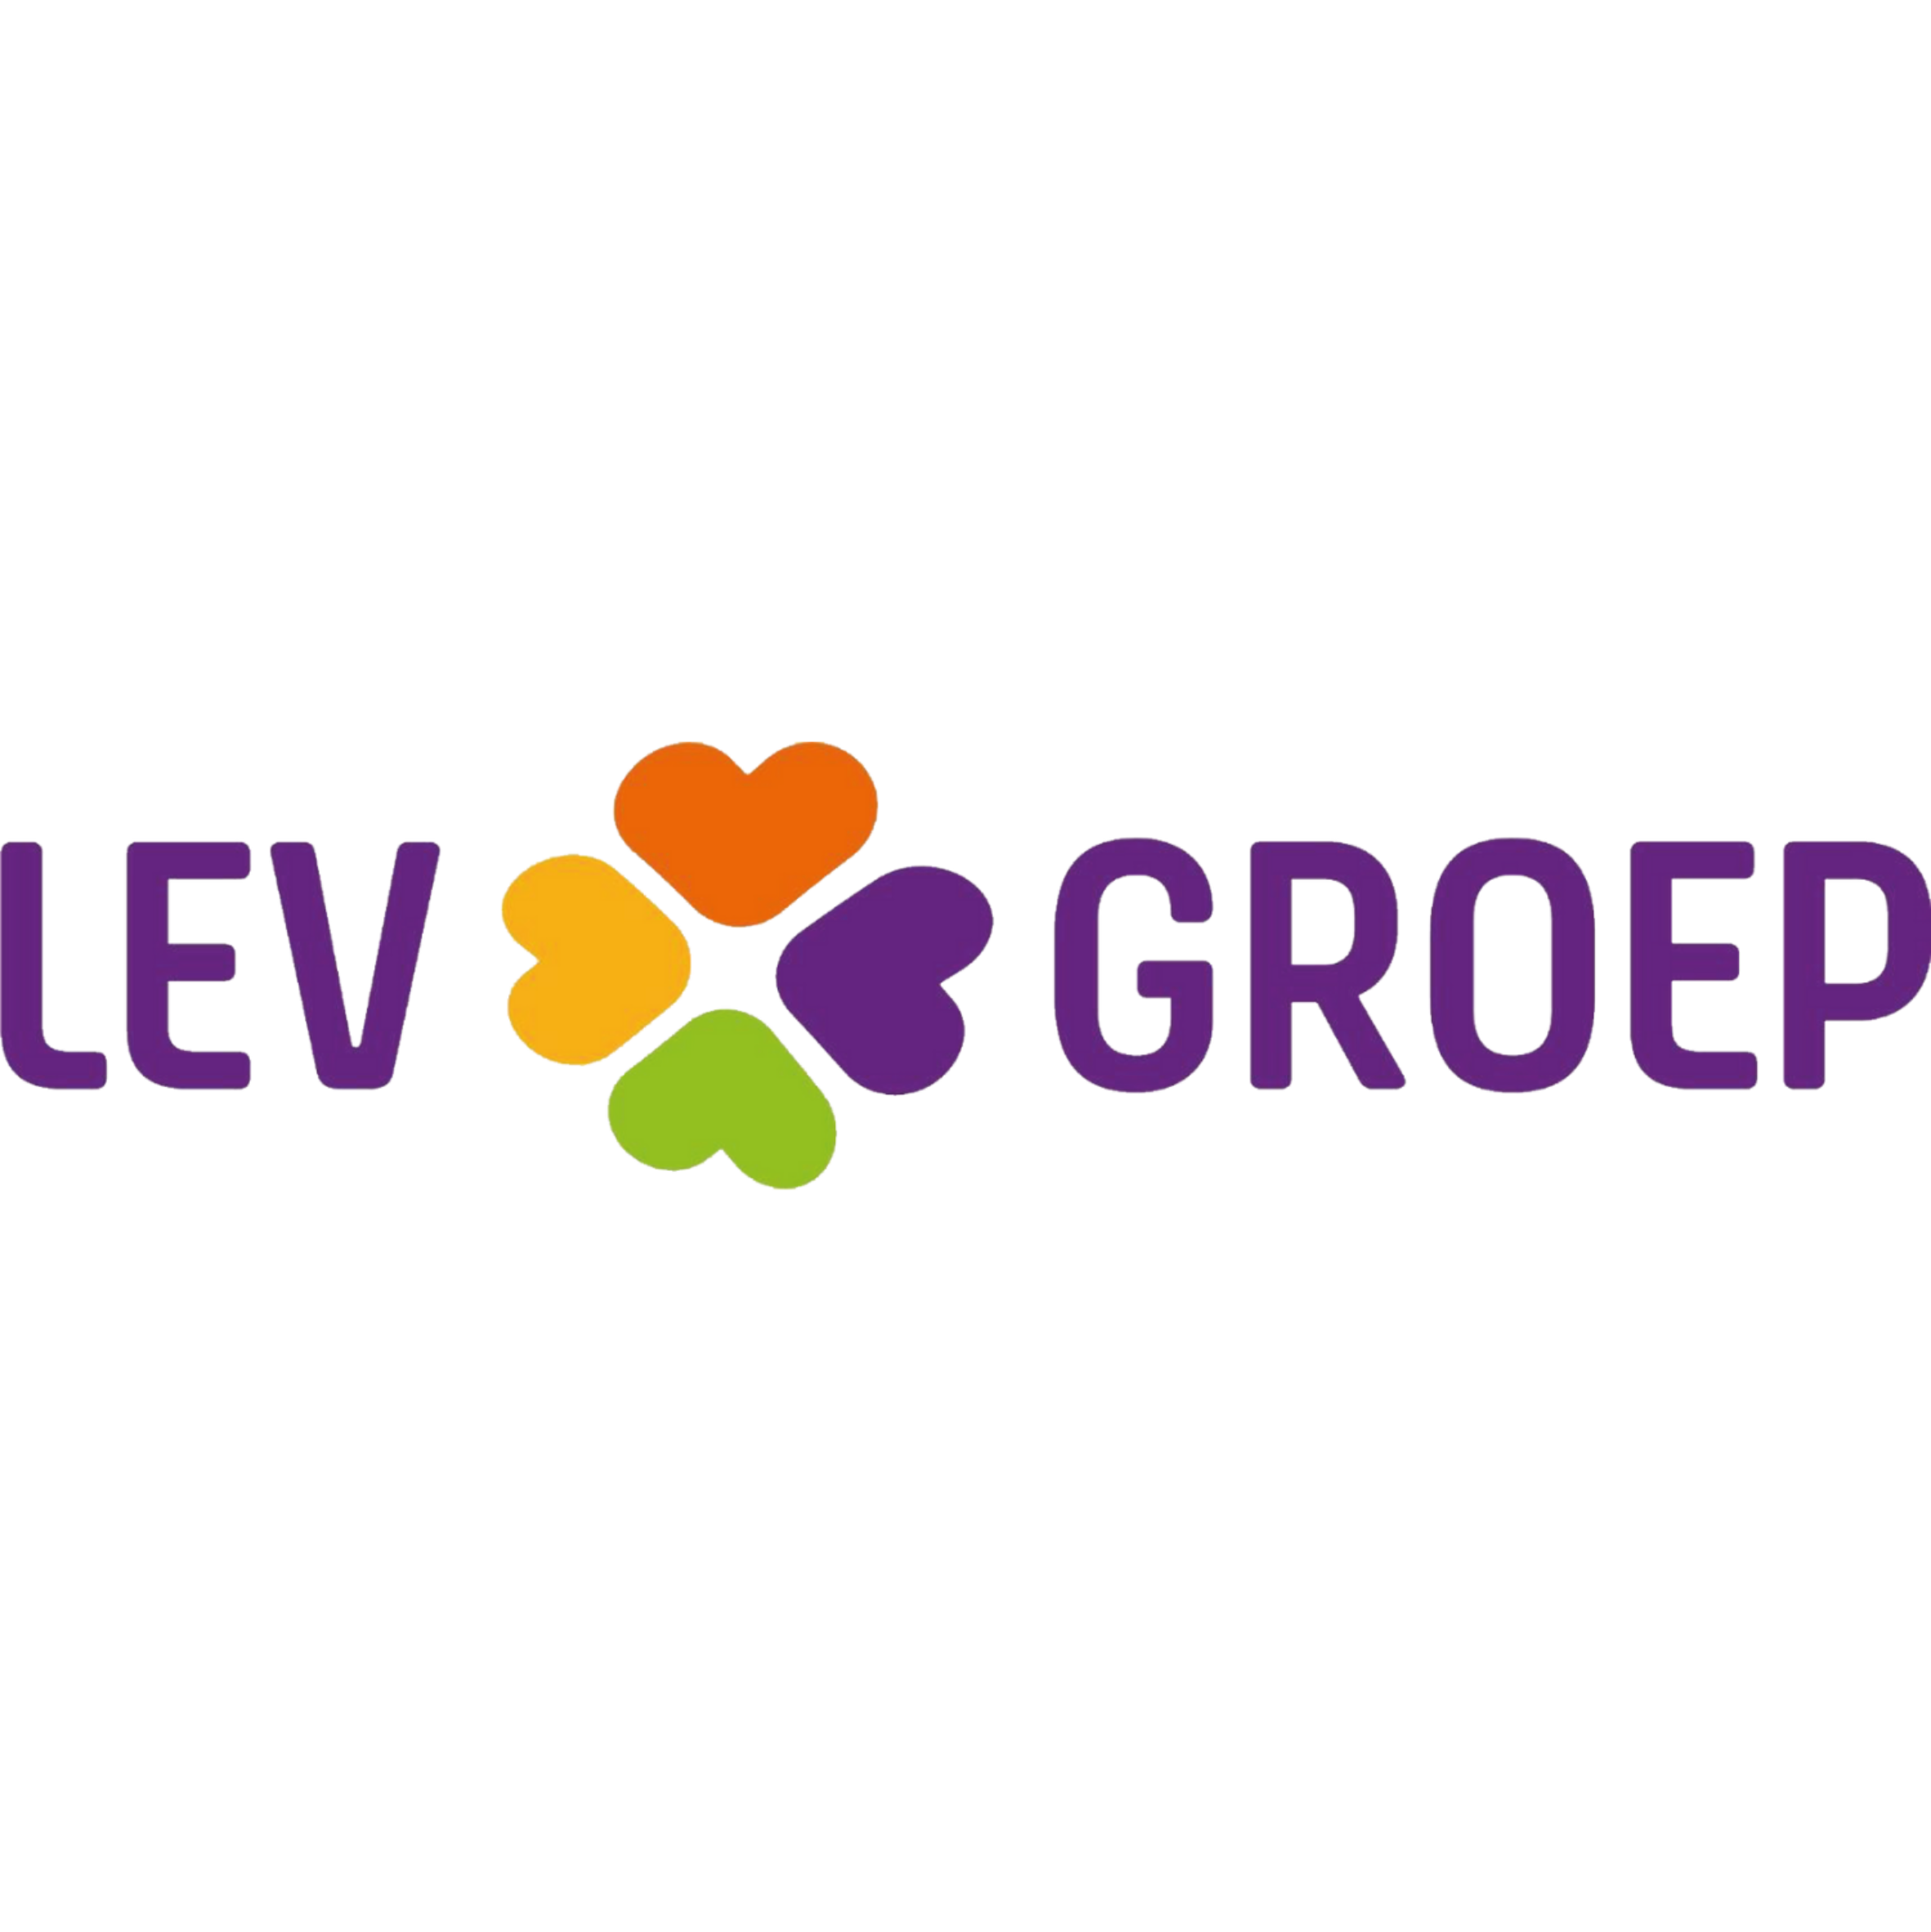 Lev Groep's logo